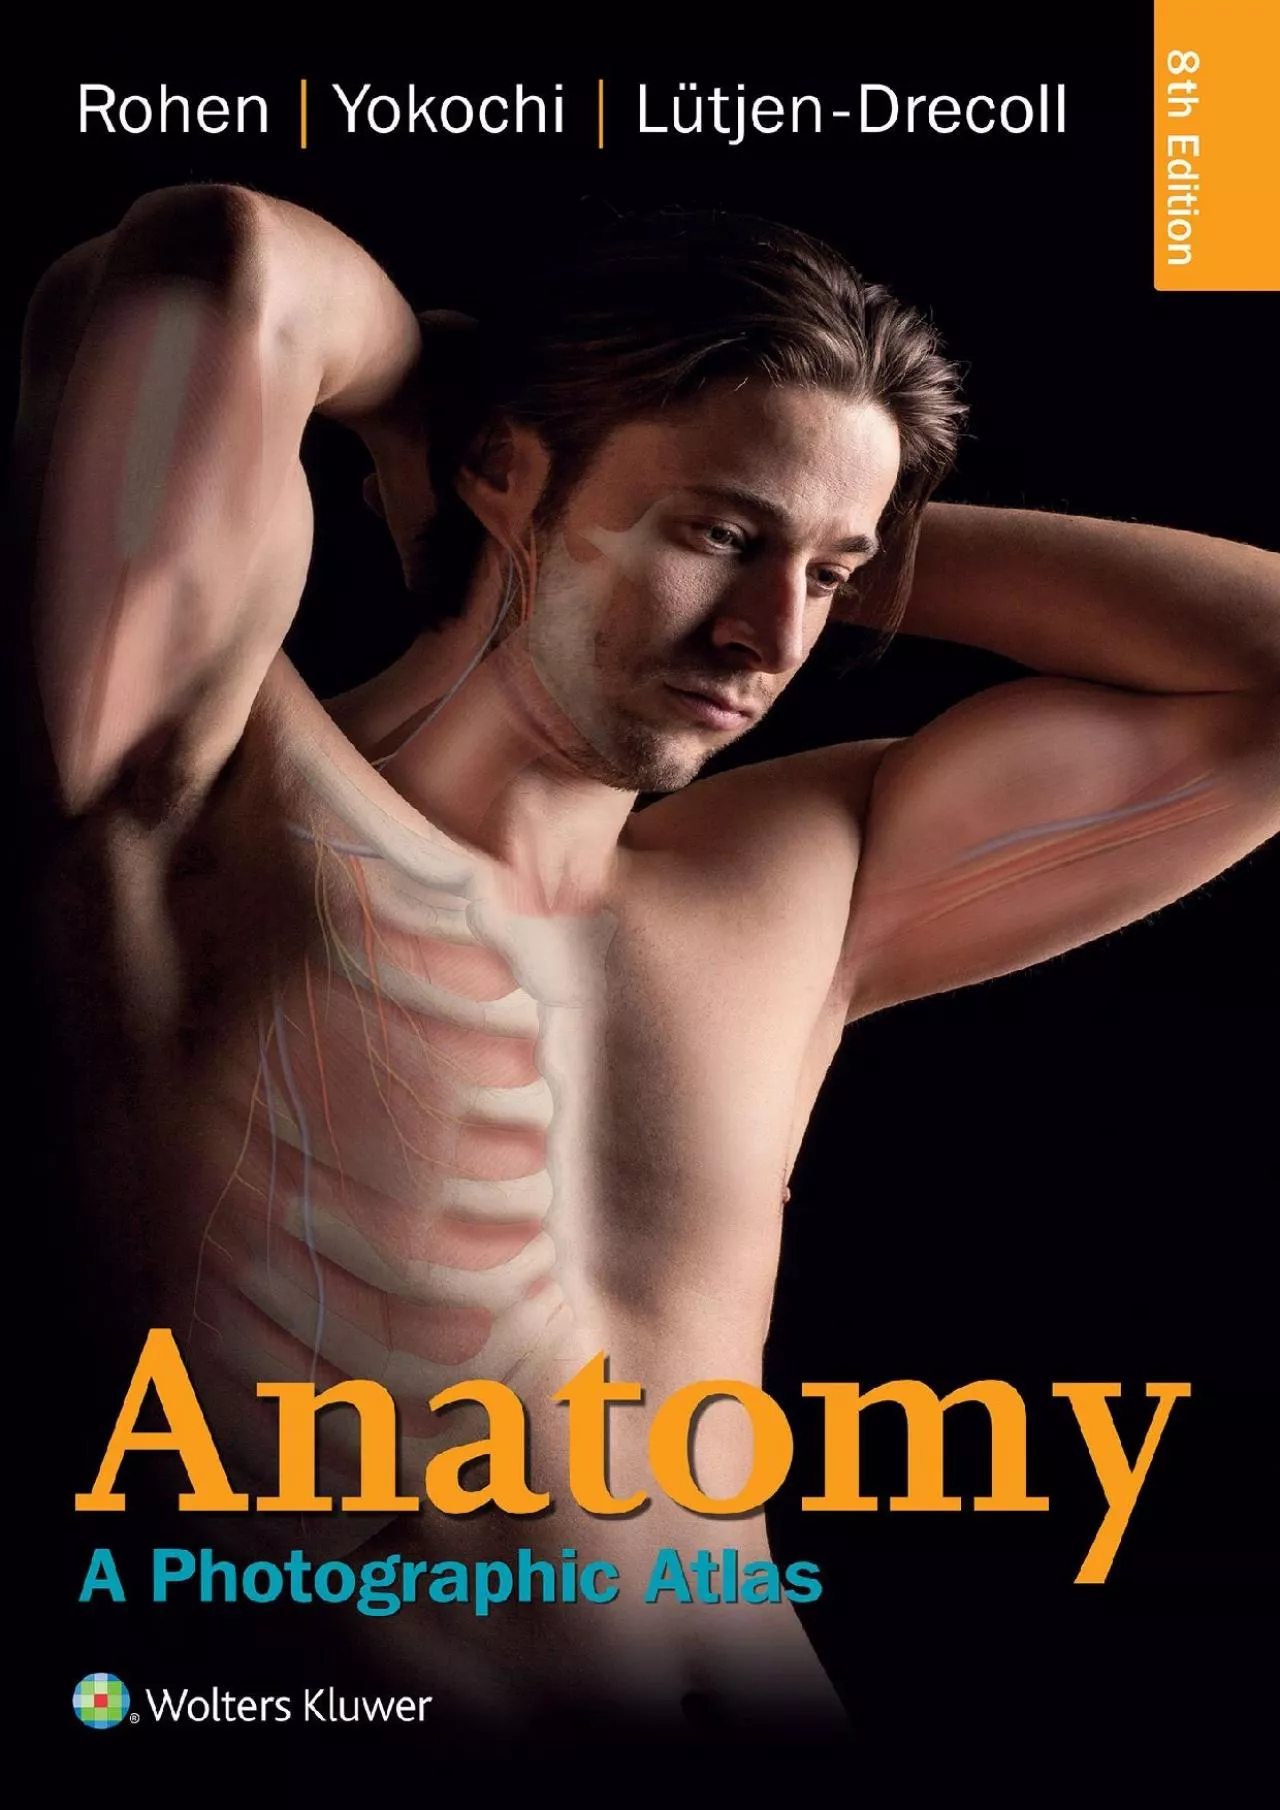 (BOOS)-Anatomy: A Photographic Atlas (Color Atlas of Anatomy a Photographic Study of the